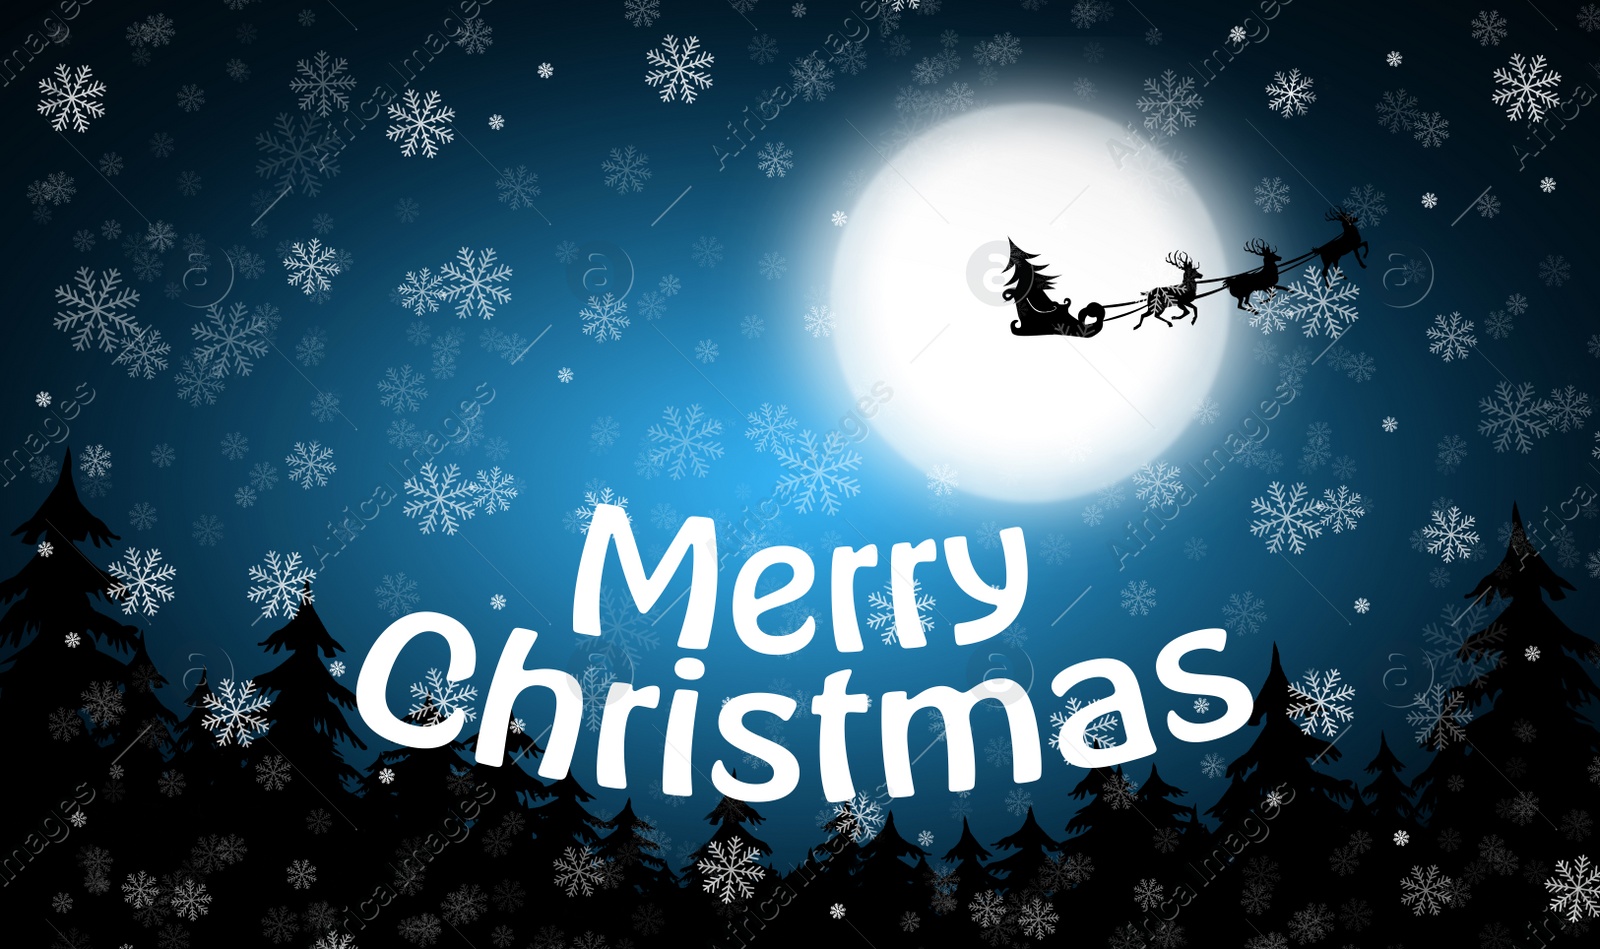 Illustration of Merry Christmas. Reindeers pulling Santa's sleigh in sky on full moon night